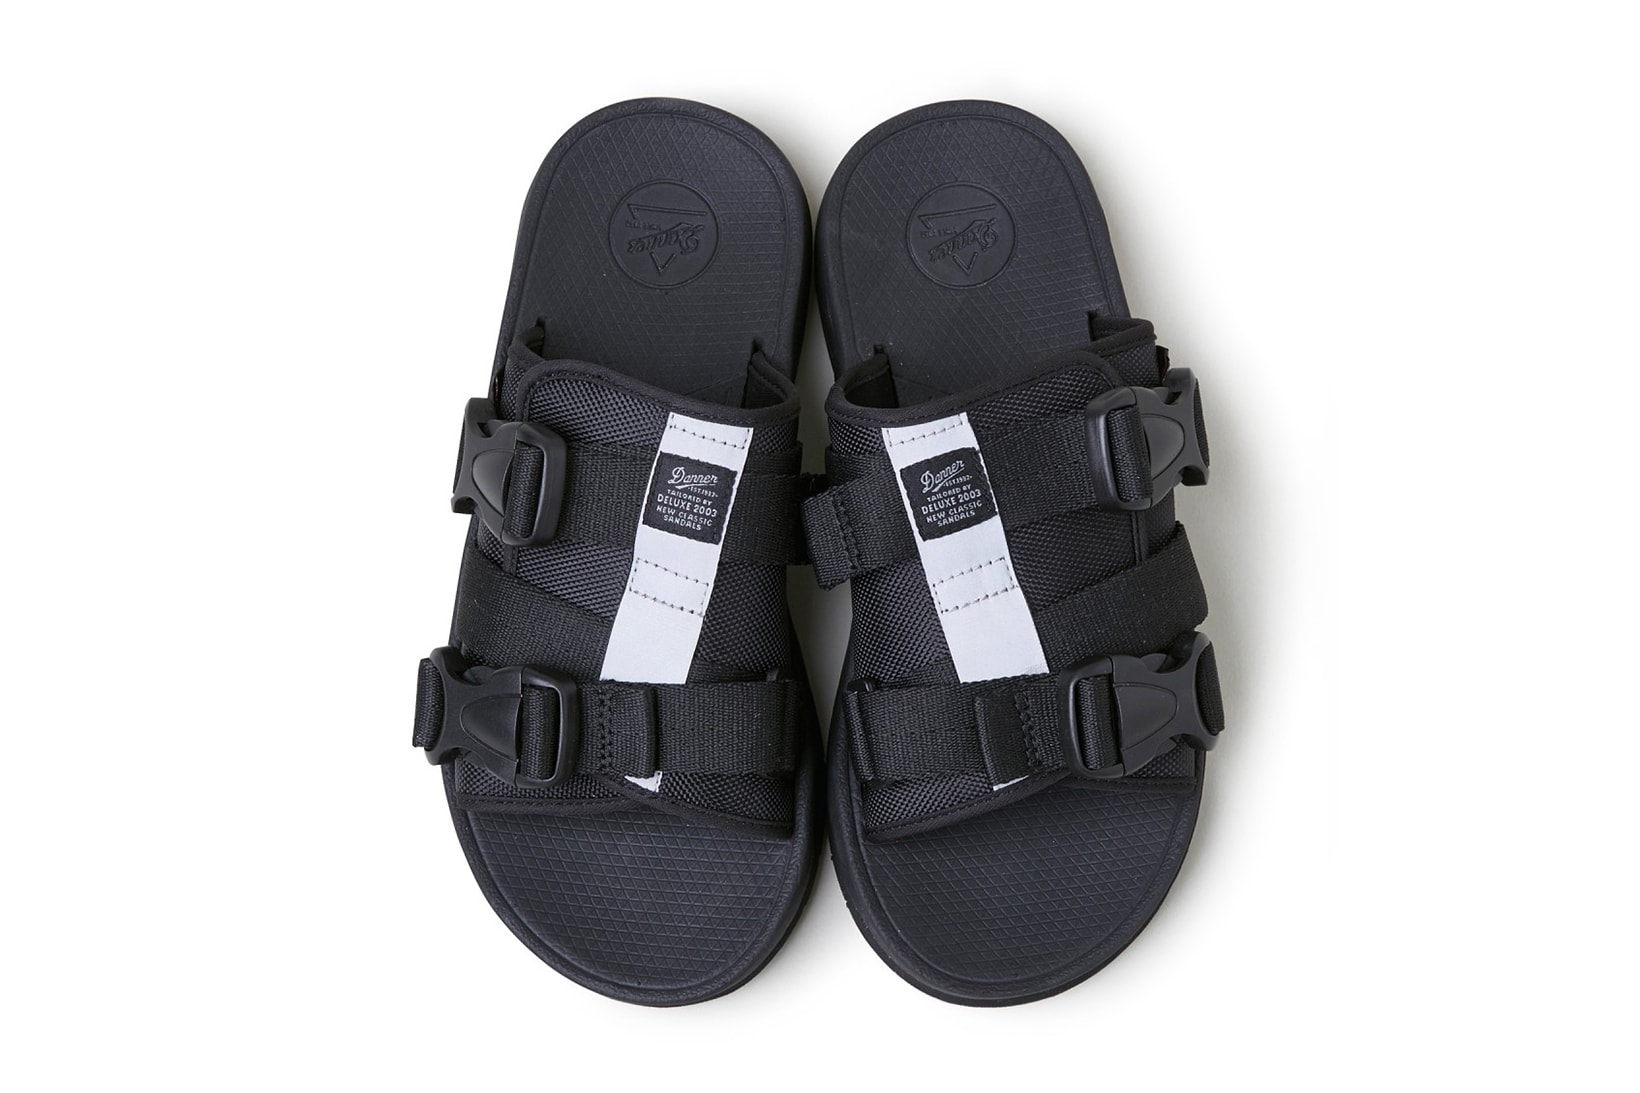 Deluxe Danner Naples Spring Summer 2018 Sandals shoes slide footwear may release date info drop japan exclusive